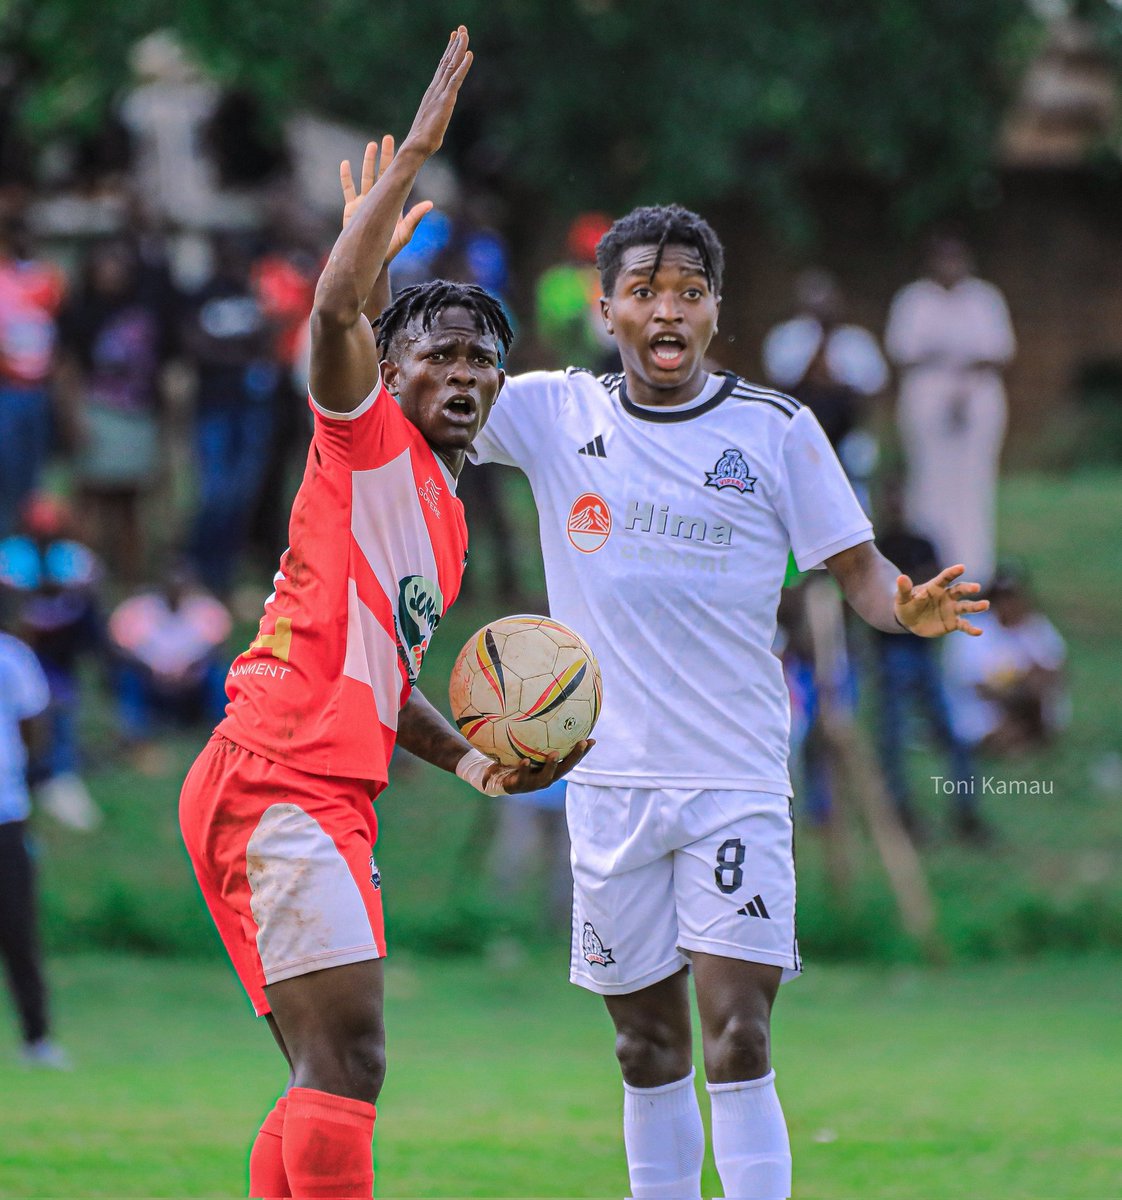 Okello to face Zaga in a key midfield battle today
4PM: Kitara FC vs Vipers SC

📸 @ToniKamau10 
#USFN #ForTheFans #UPL